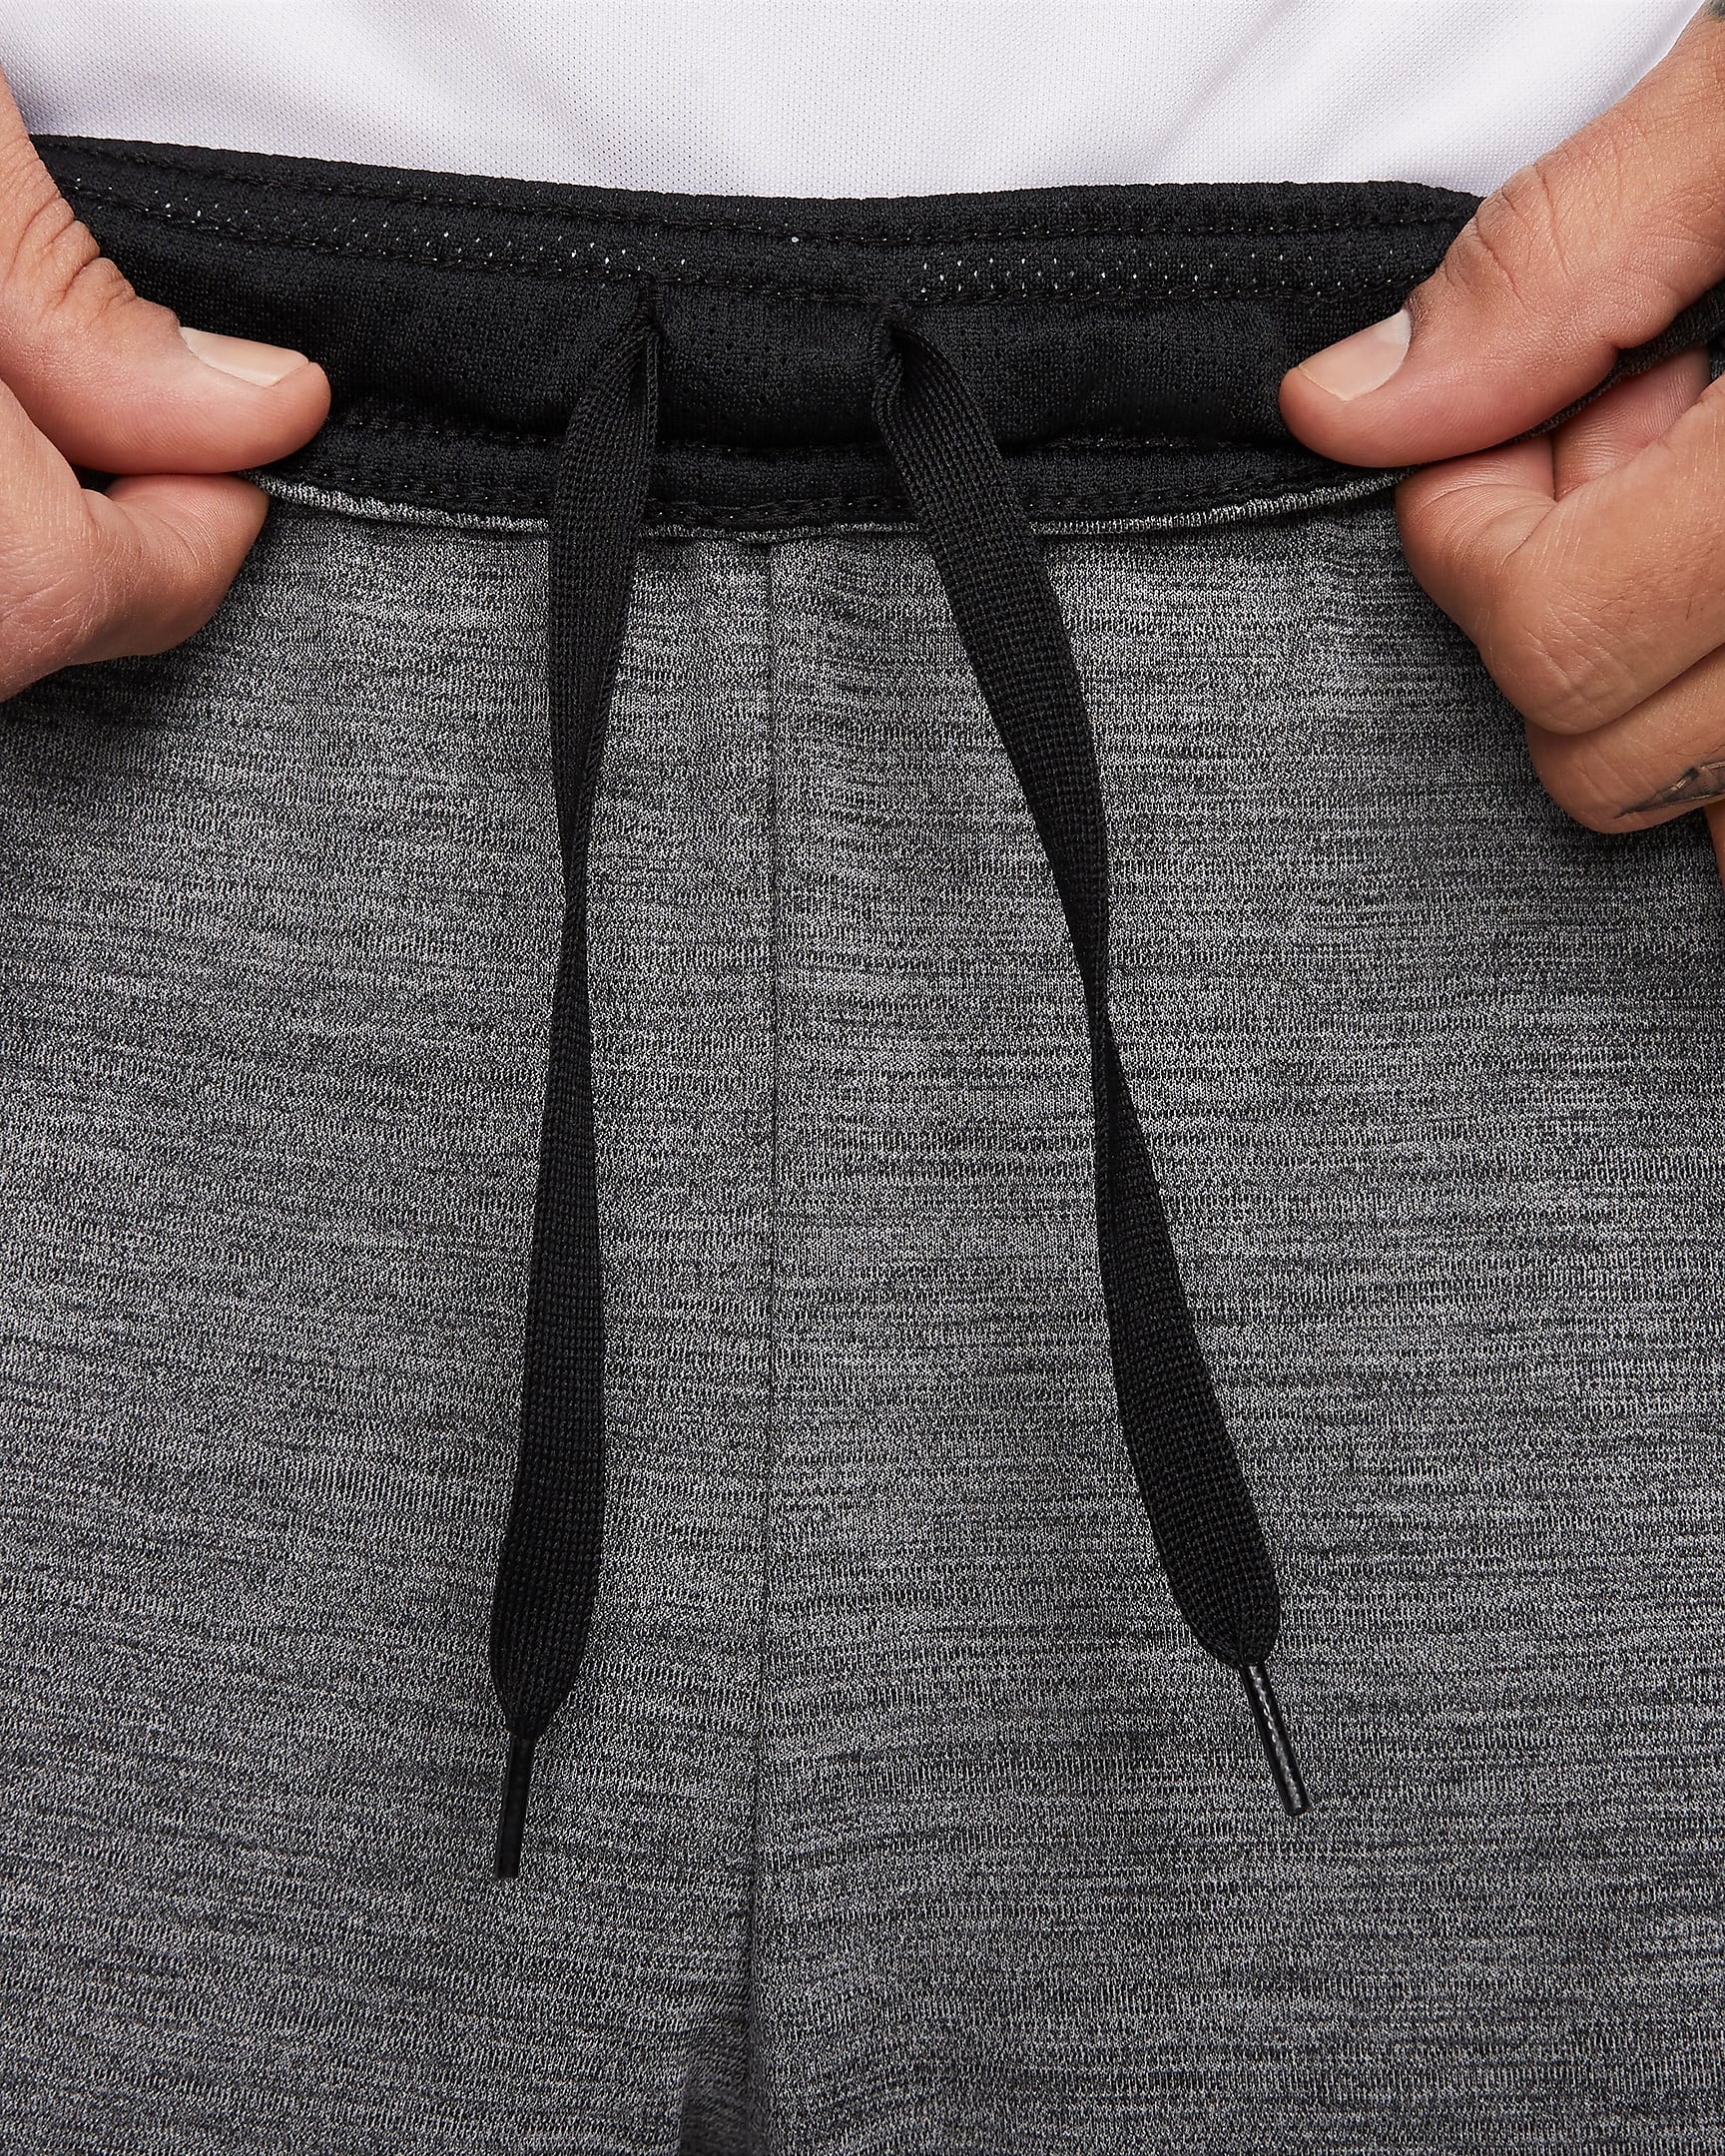 Nike Dri-FIT Tapered Training Pants - Tracksuit trousers Men's